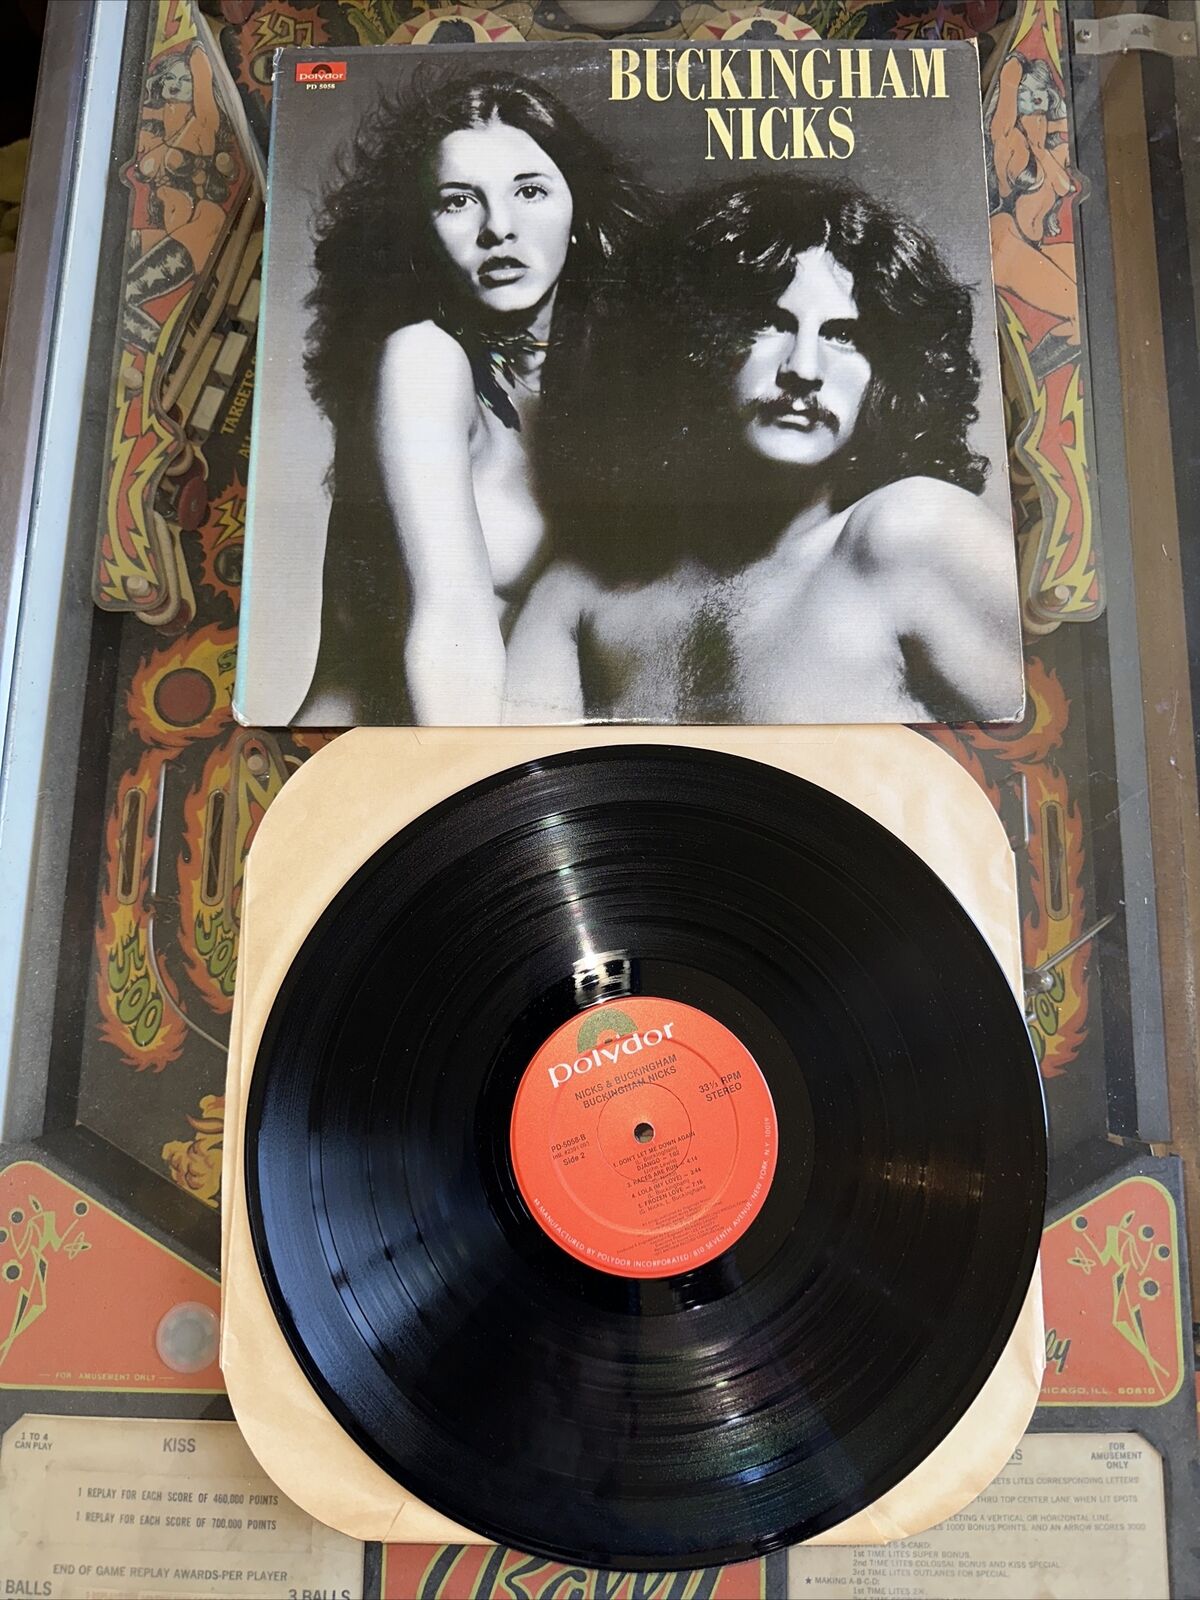 BUCKINGHAM NICKS ~ VINYL RECORD ALBUM LP 1973 / Pre Fleetwood Mac - PD5058 VG+